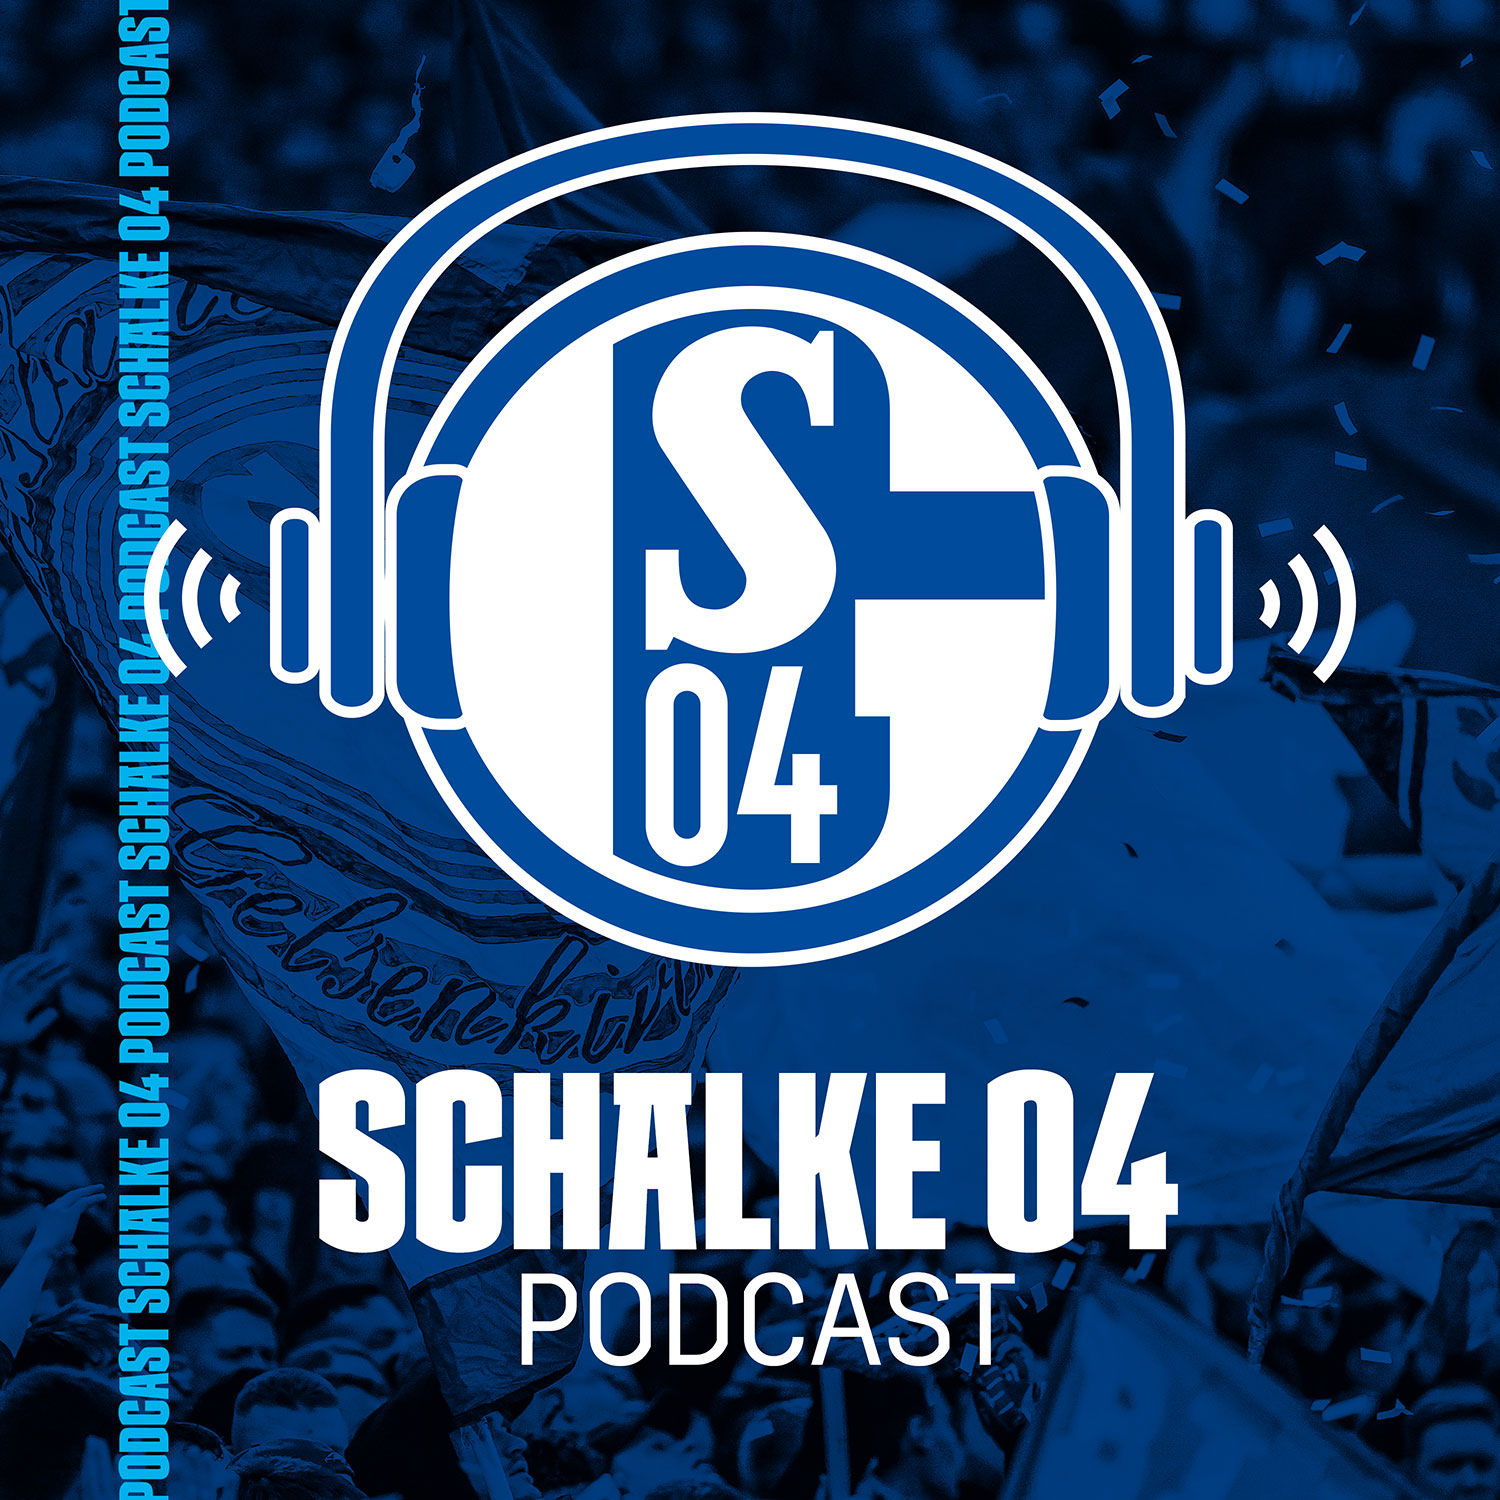 Schalke 04 Podcast RTL+